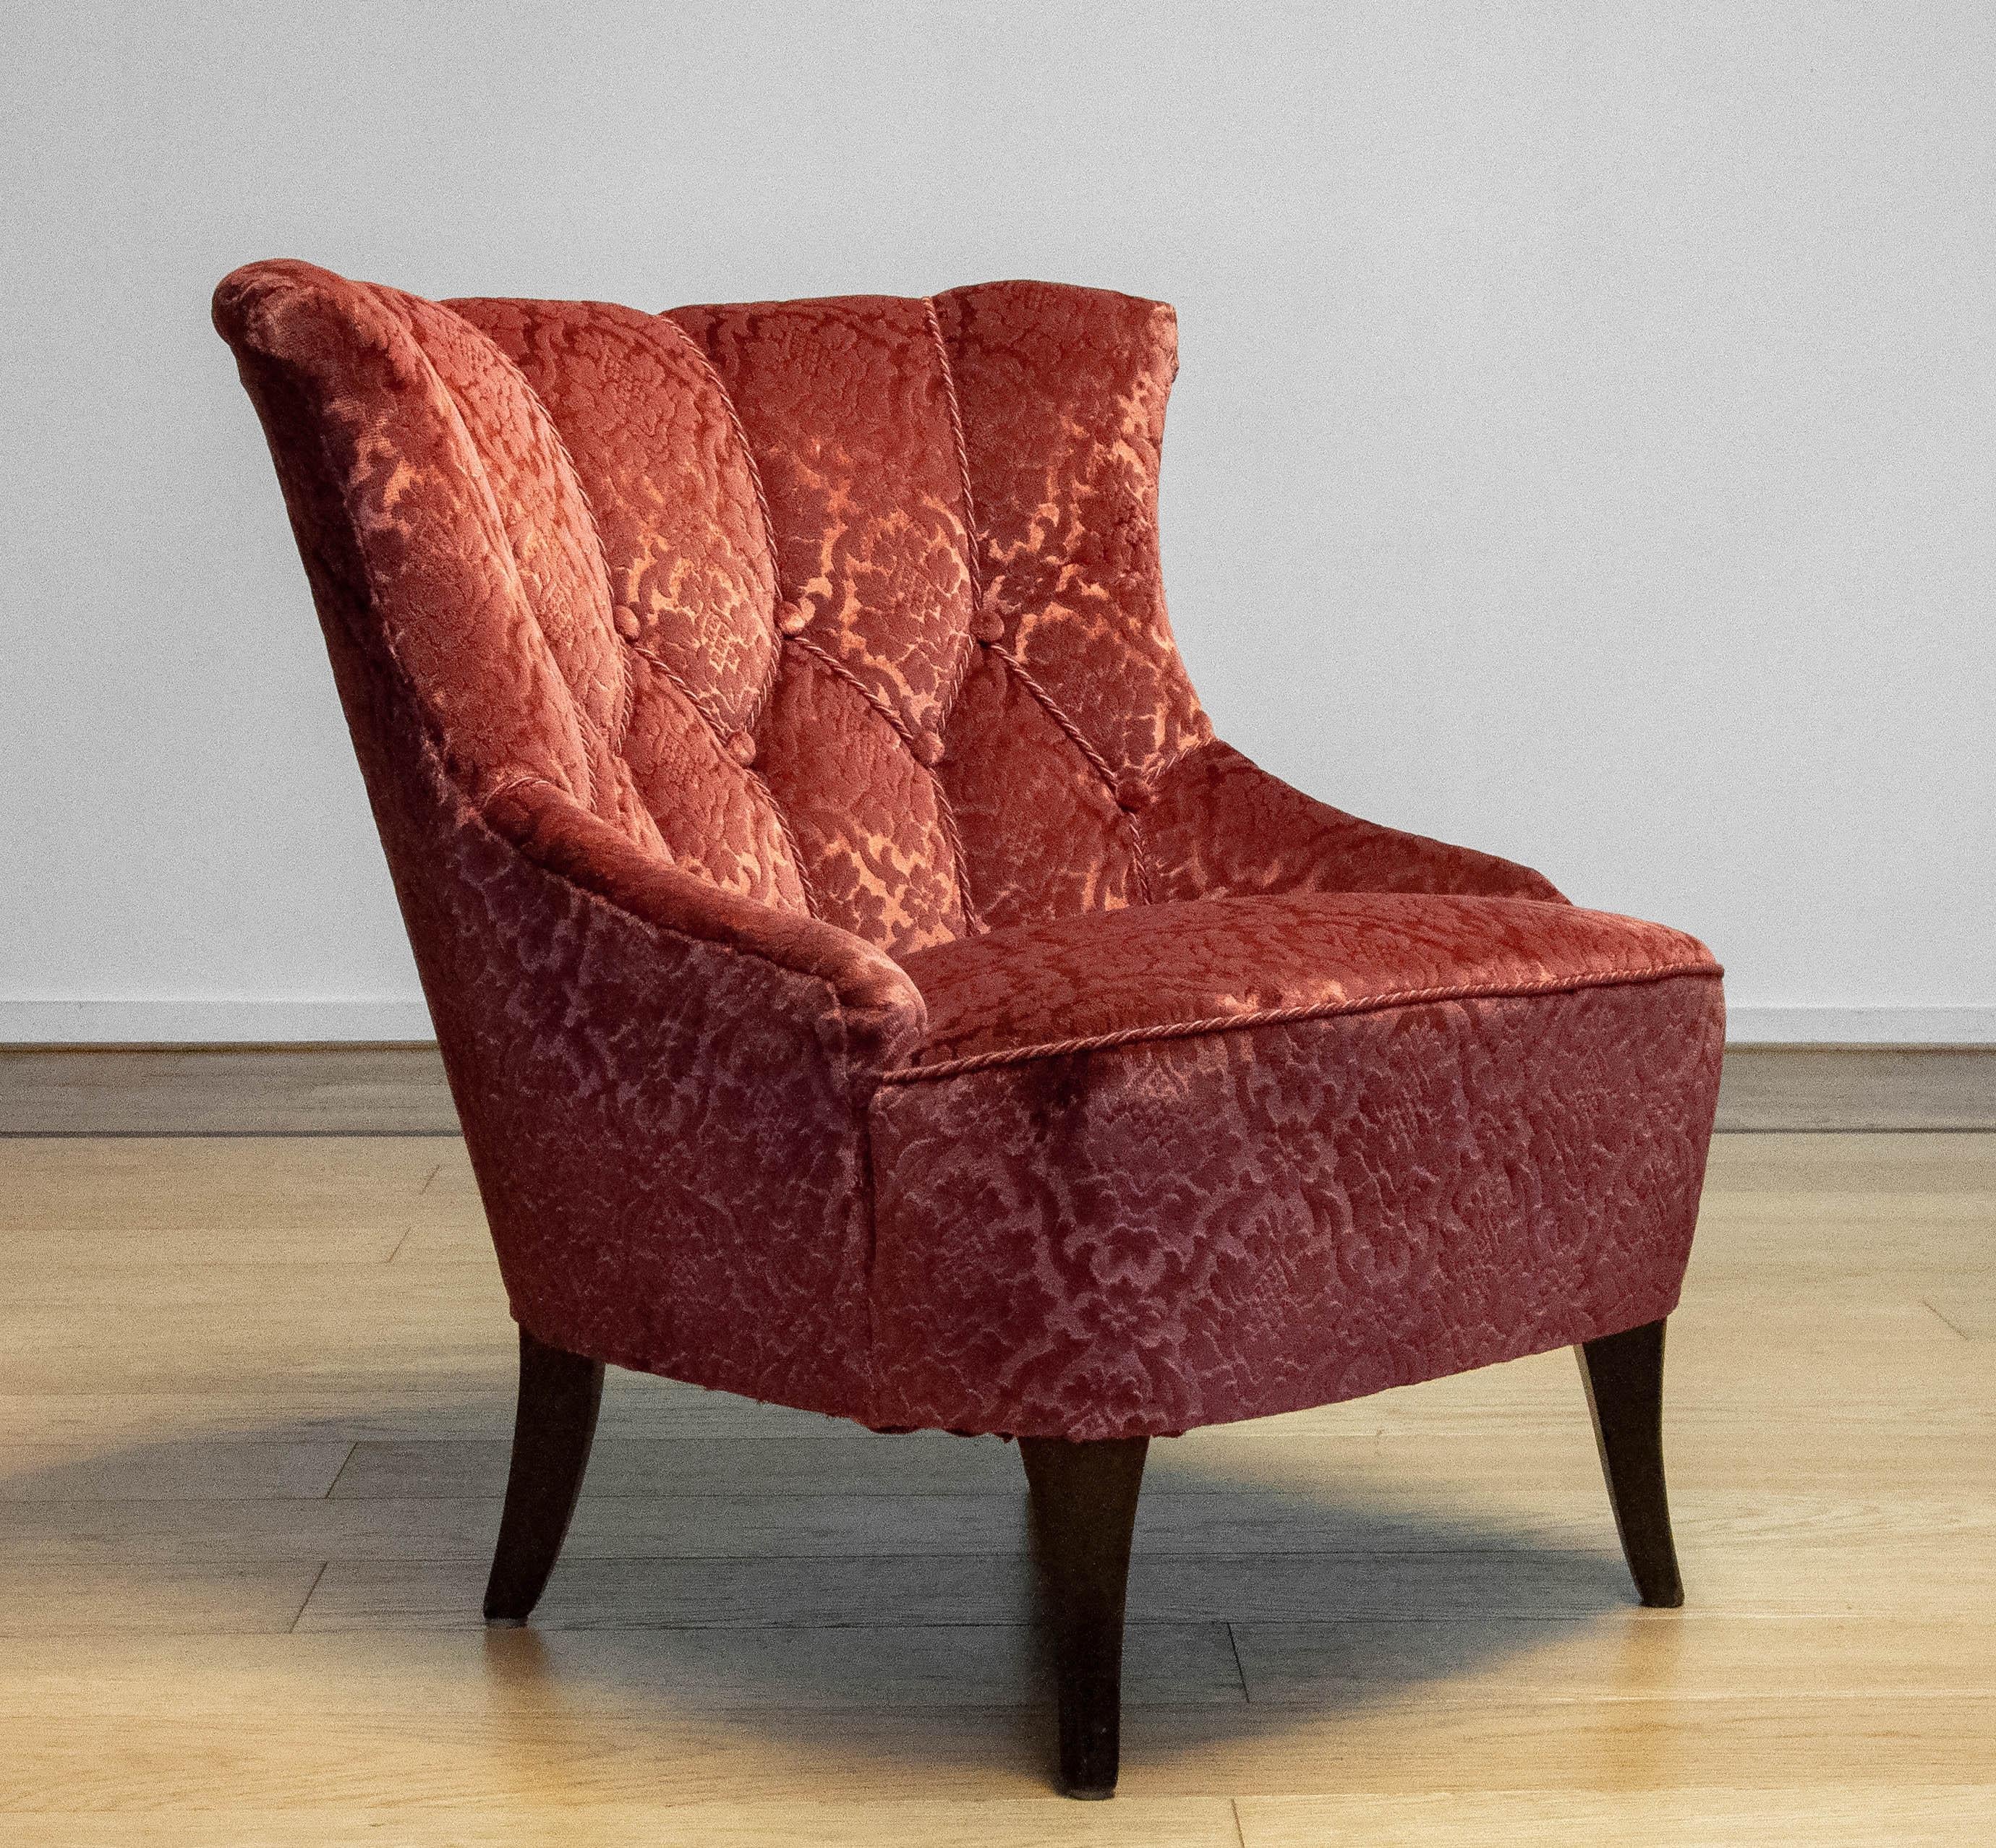 20th Century Napoleon III Slipper Chair In Brique Ton Sur Ton Jacquard Velvet For Sale 4